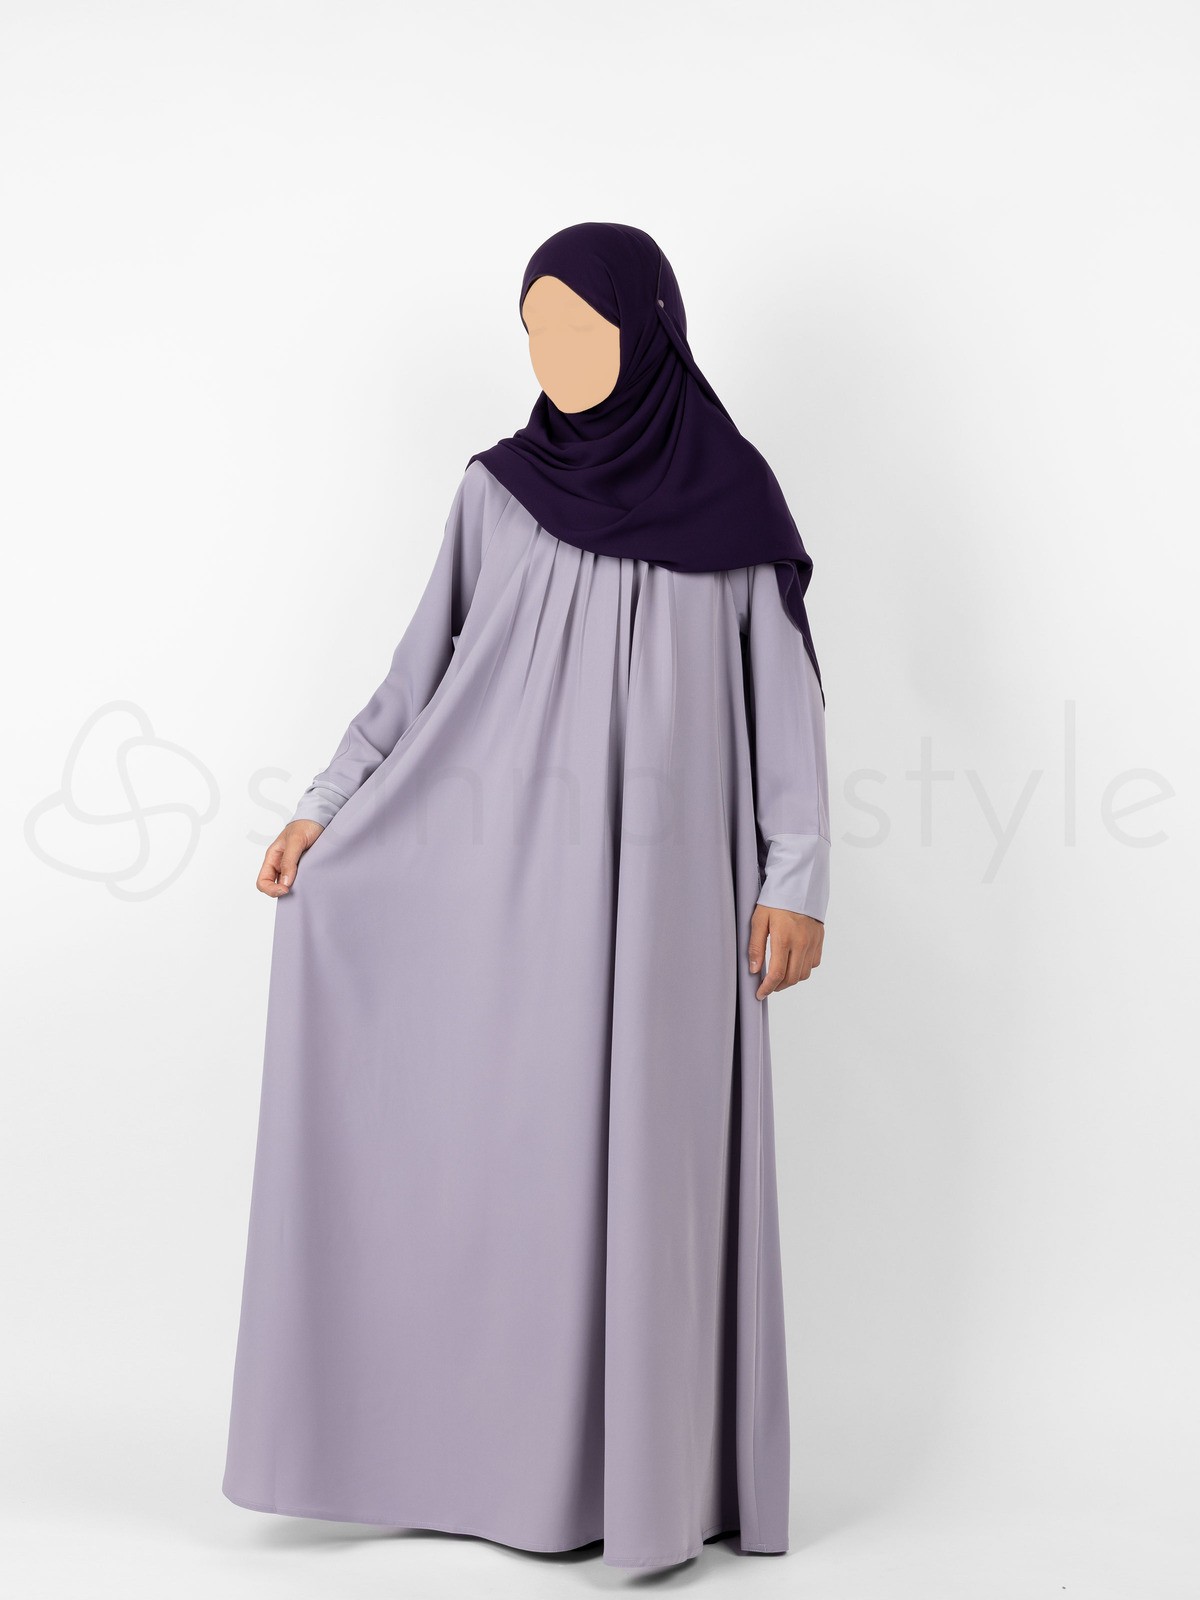 Sunnah Style - Girls Simplicity Umbrella Abaya (Dream)